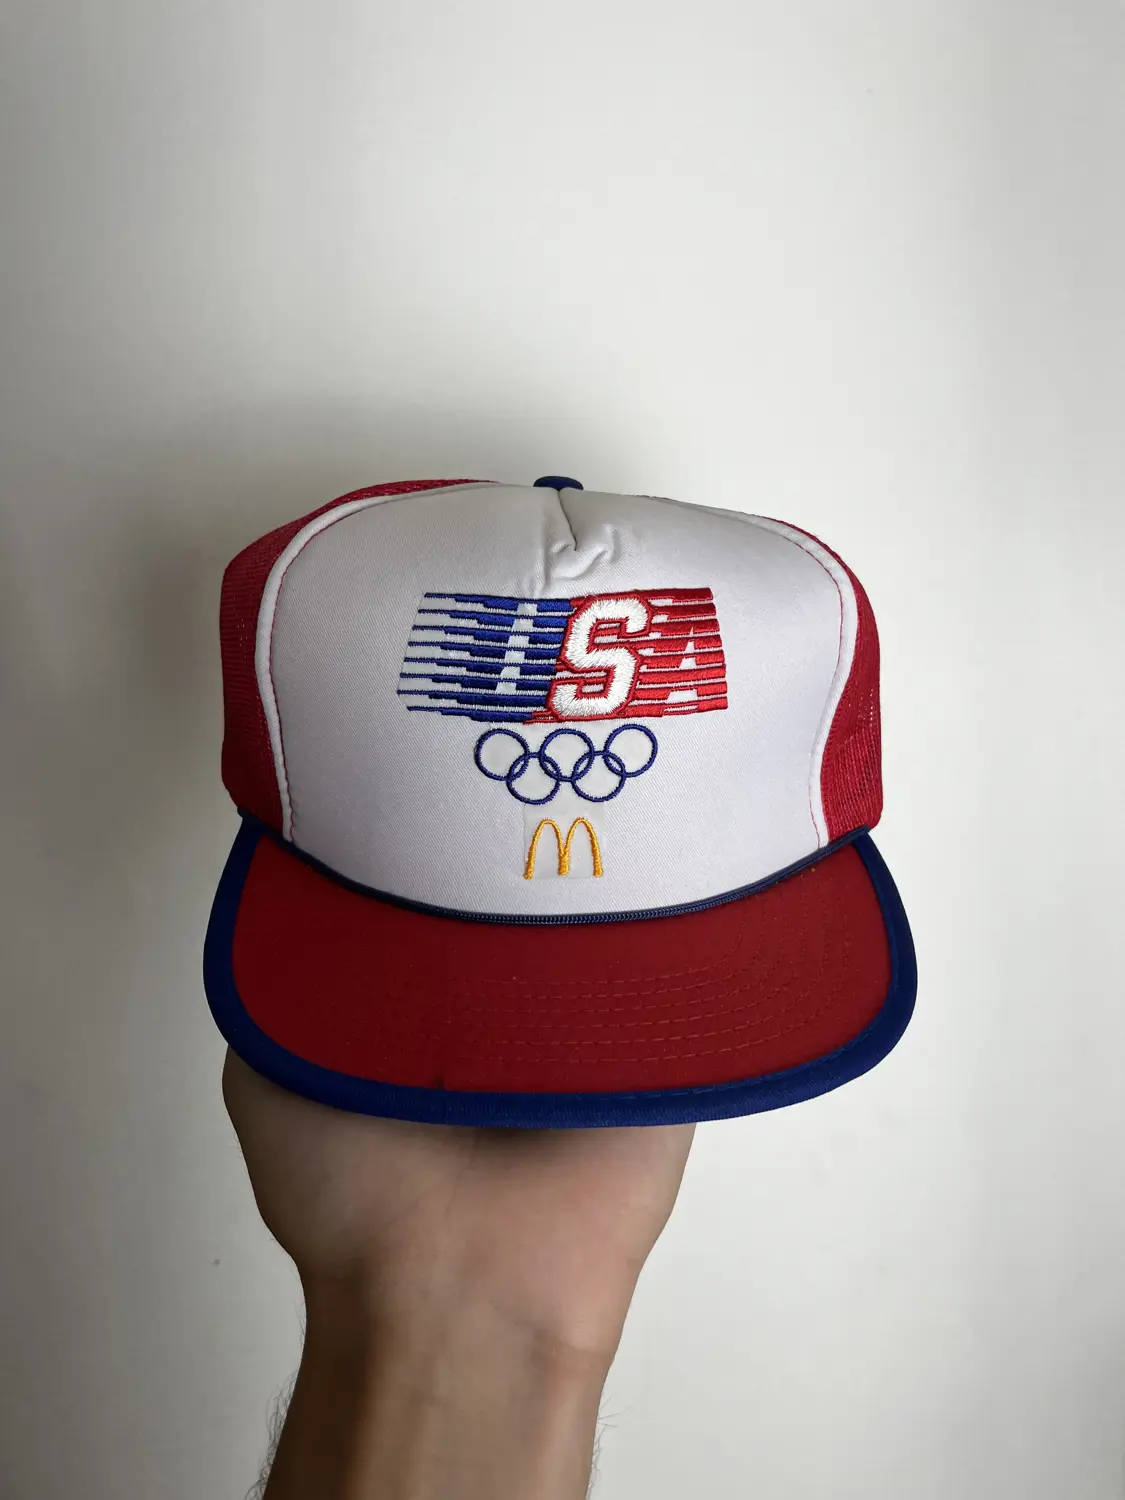 McDonald’s USA hat